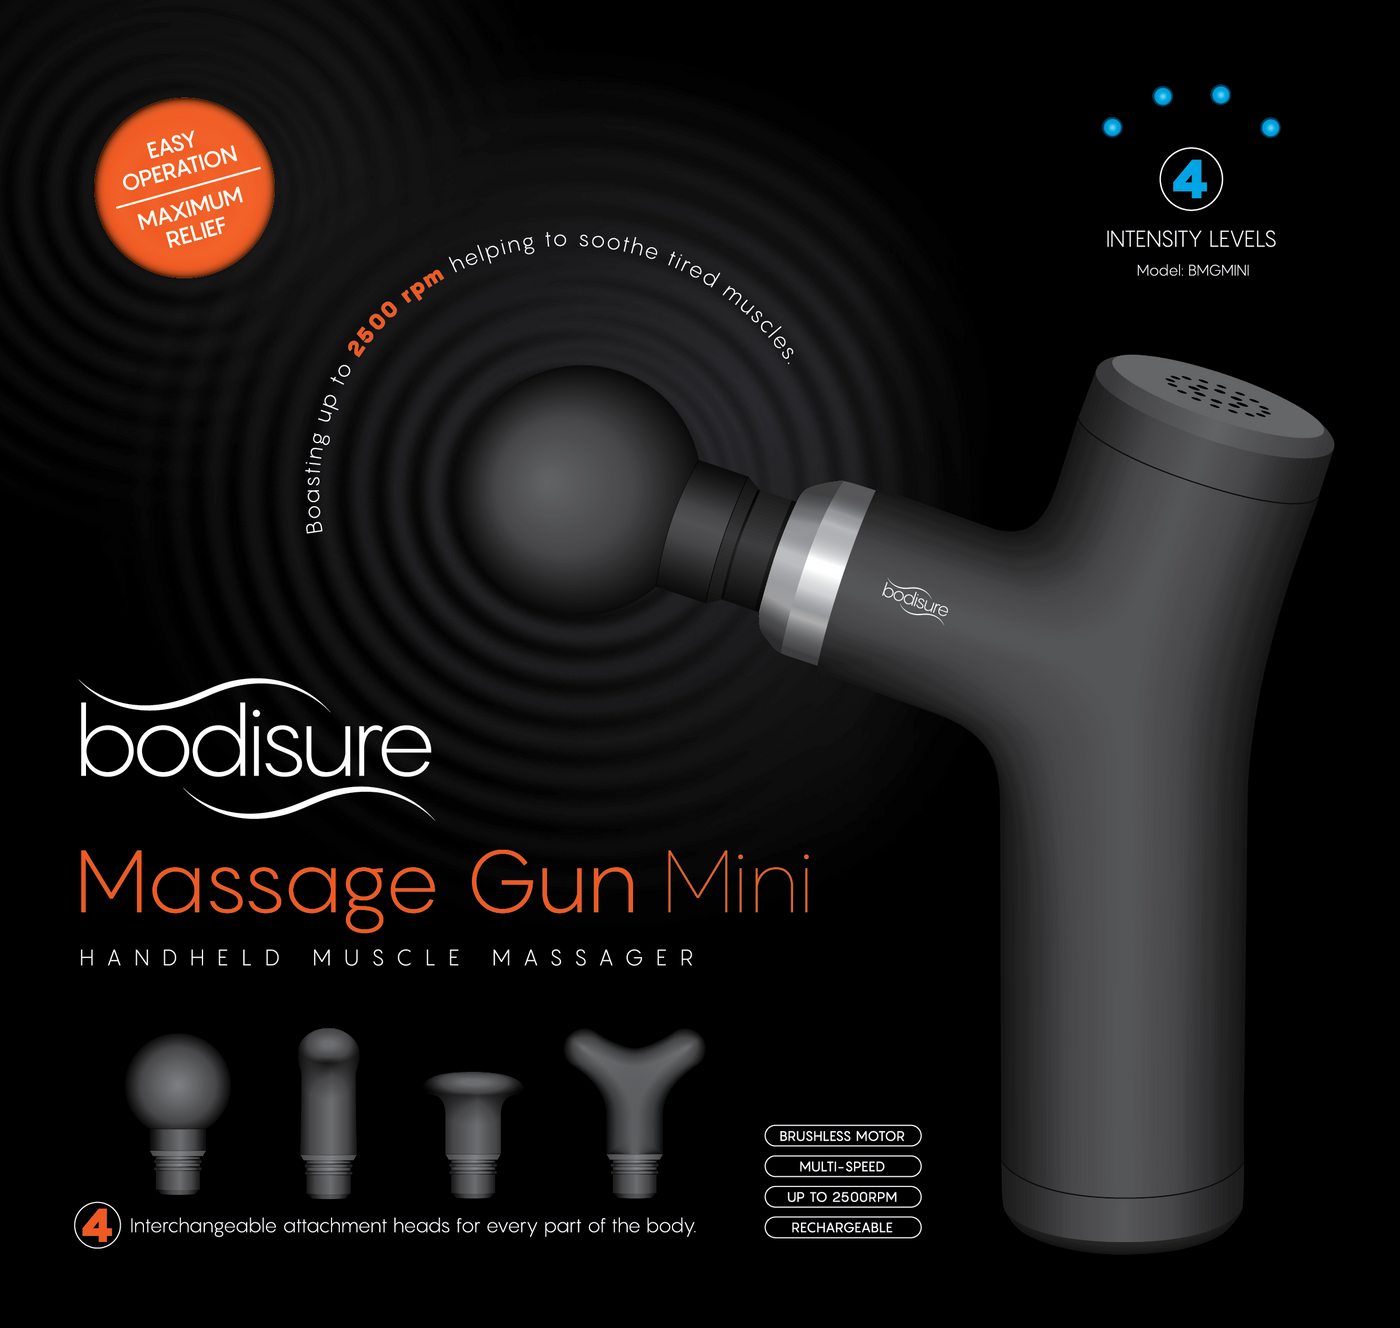 BodiSure Handheld Muscle Massage Gun Mini